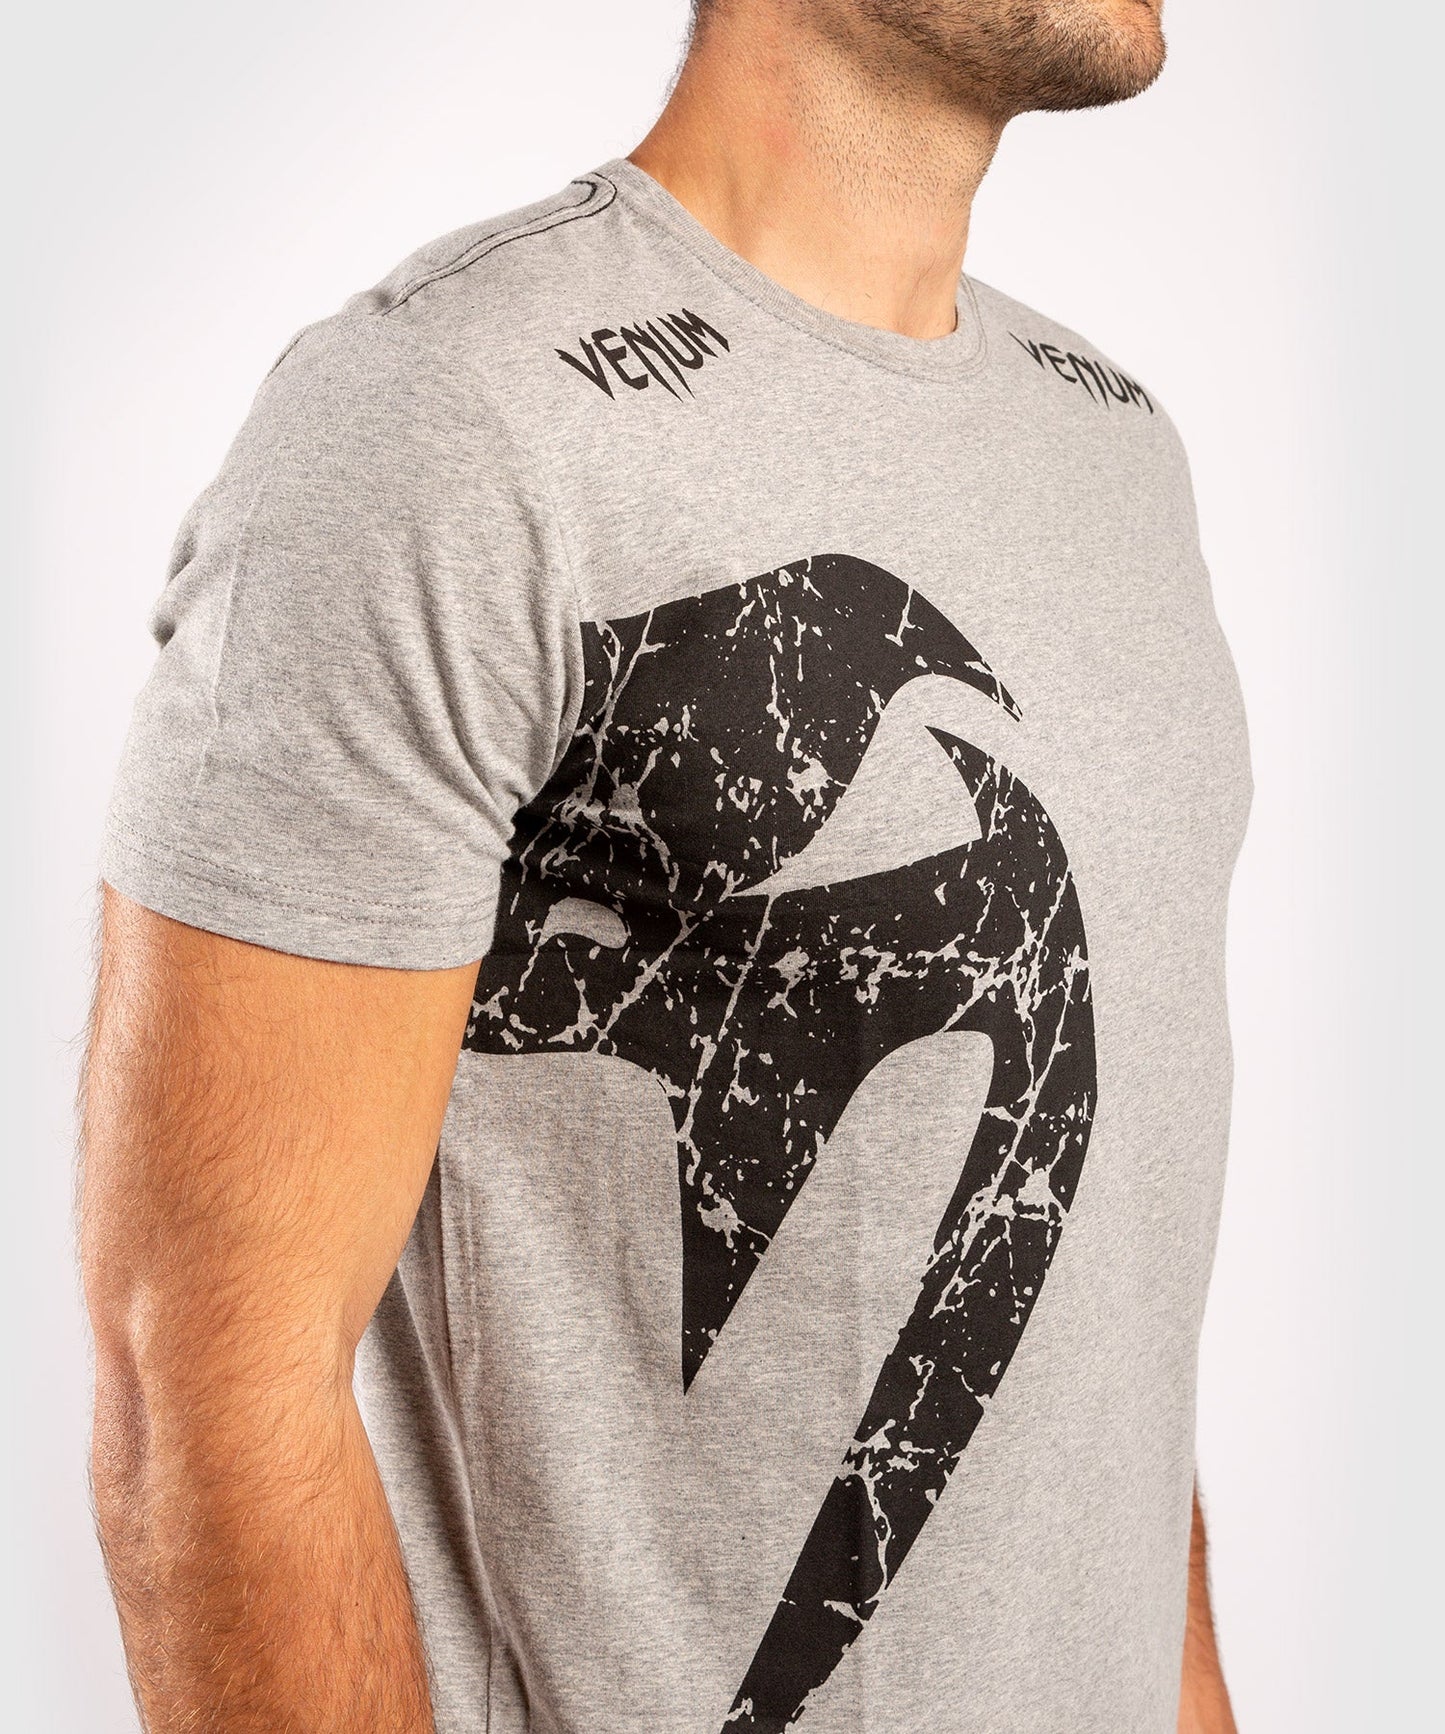 Venum Giant T-shirt - Grey/Black